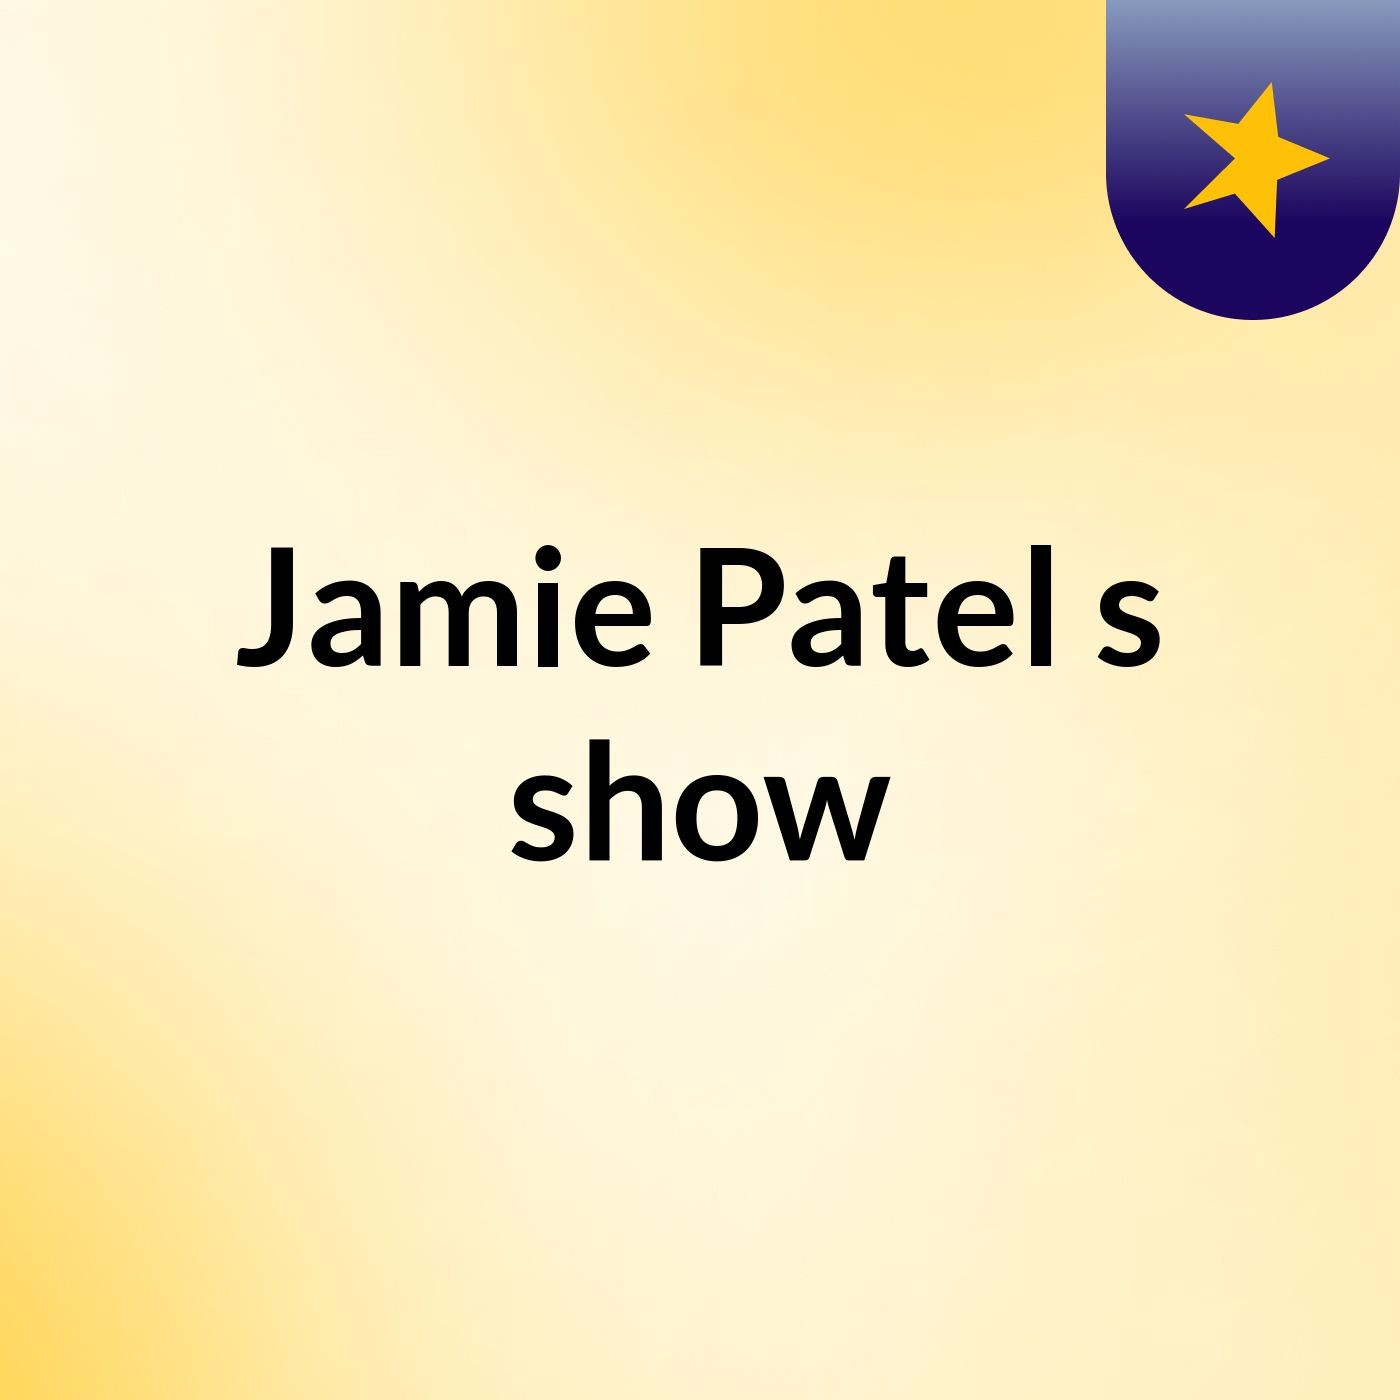 Jamie Patel's show